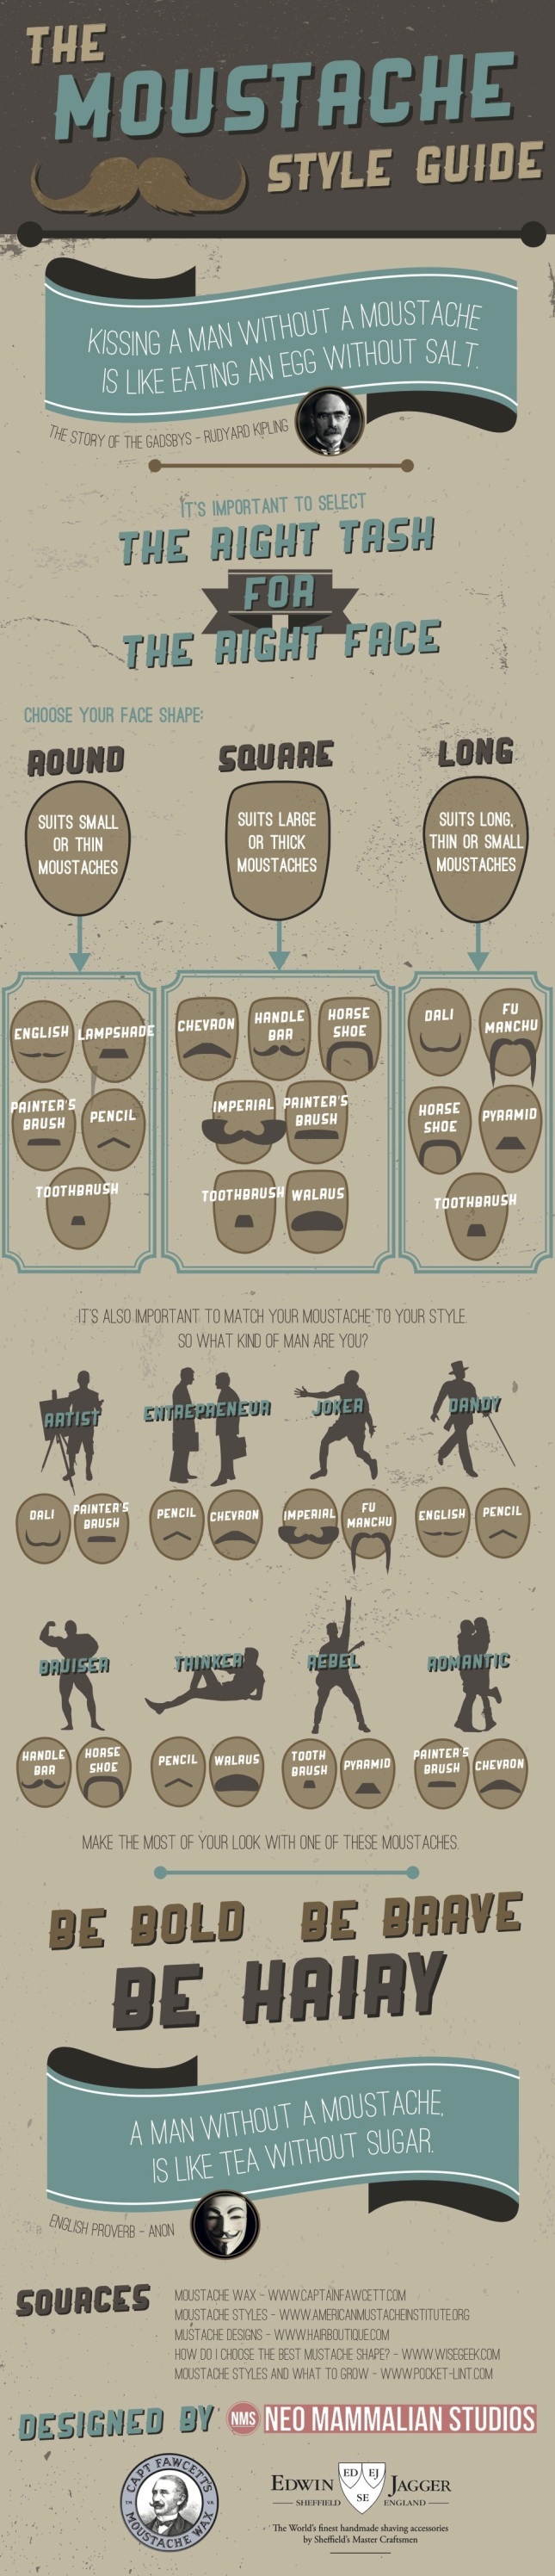 Moustache Style Guide